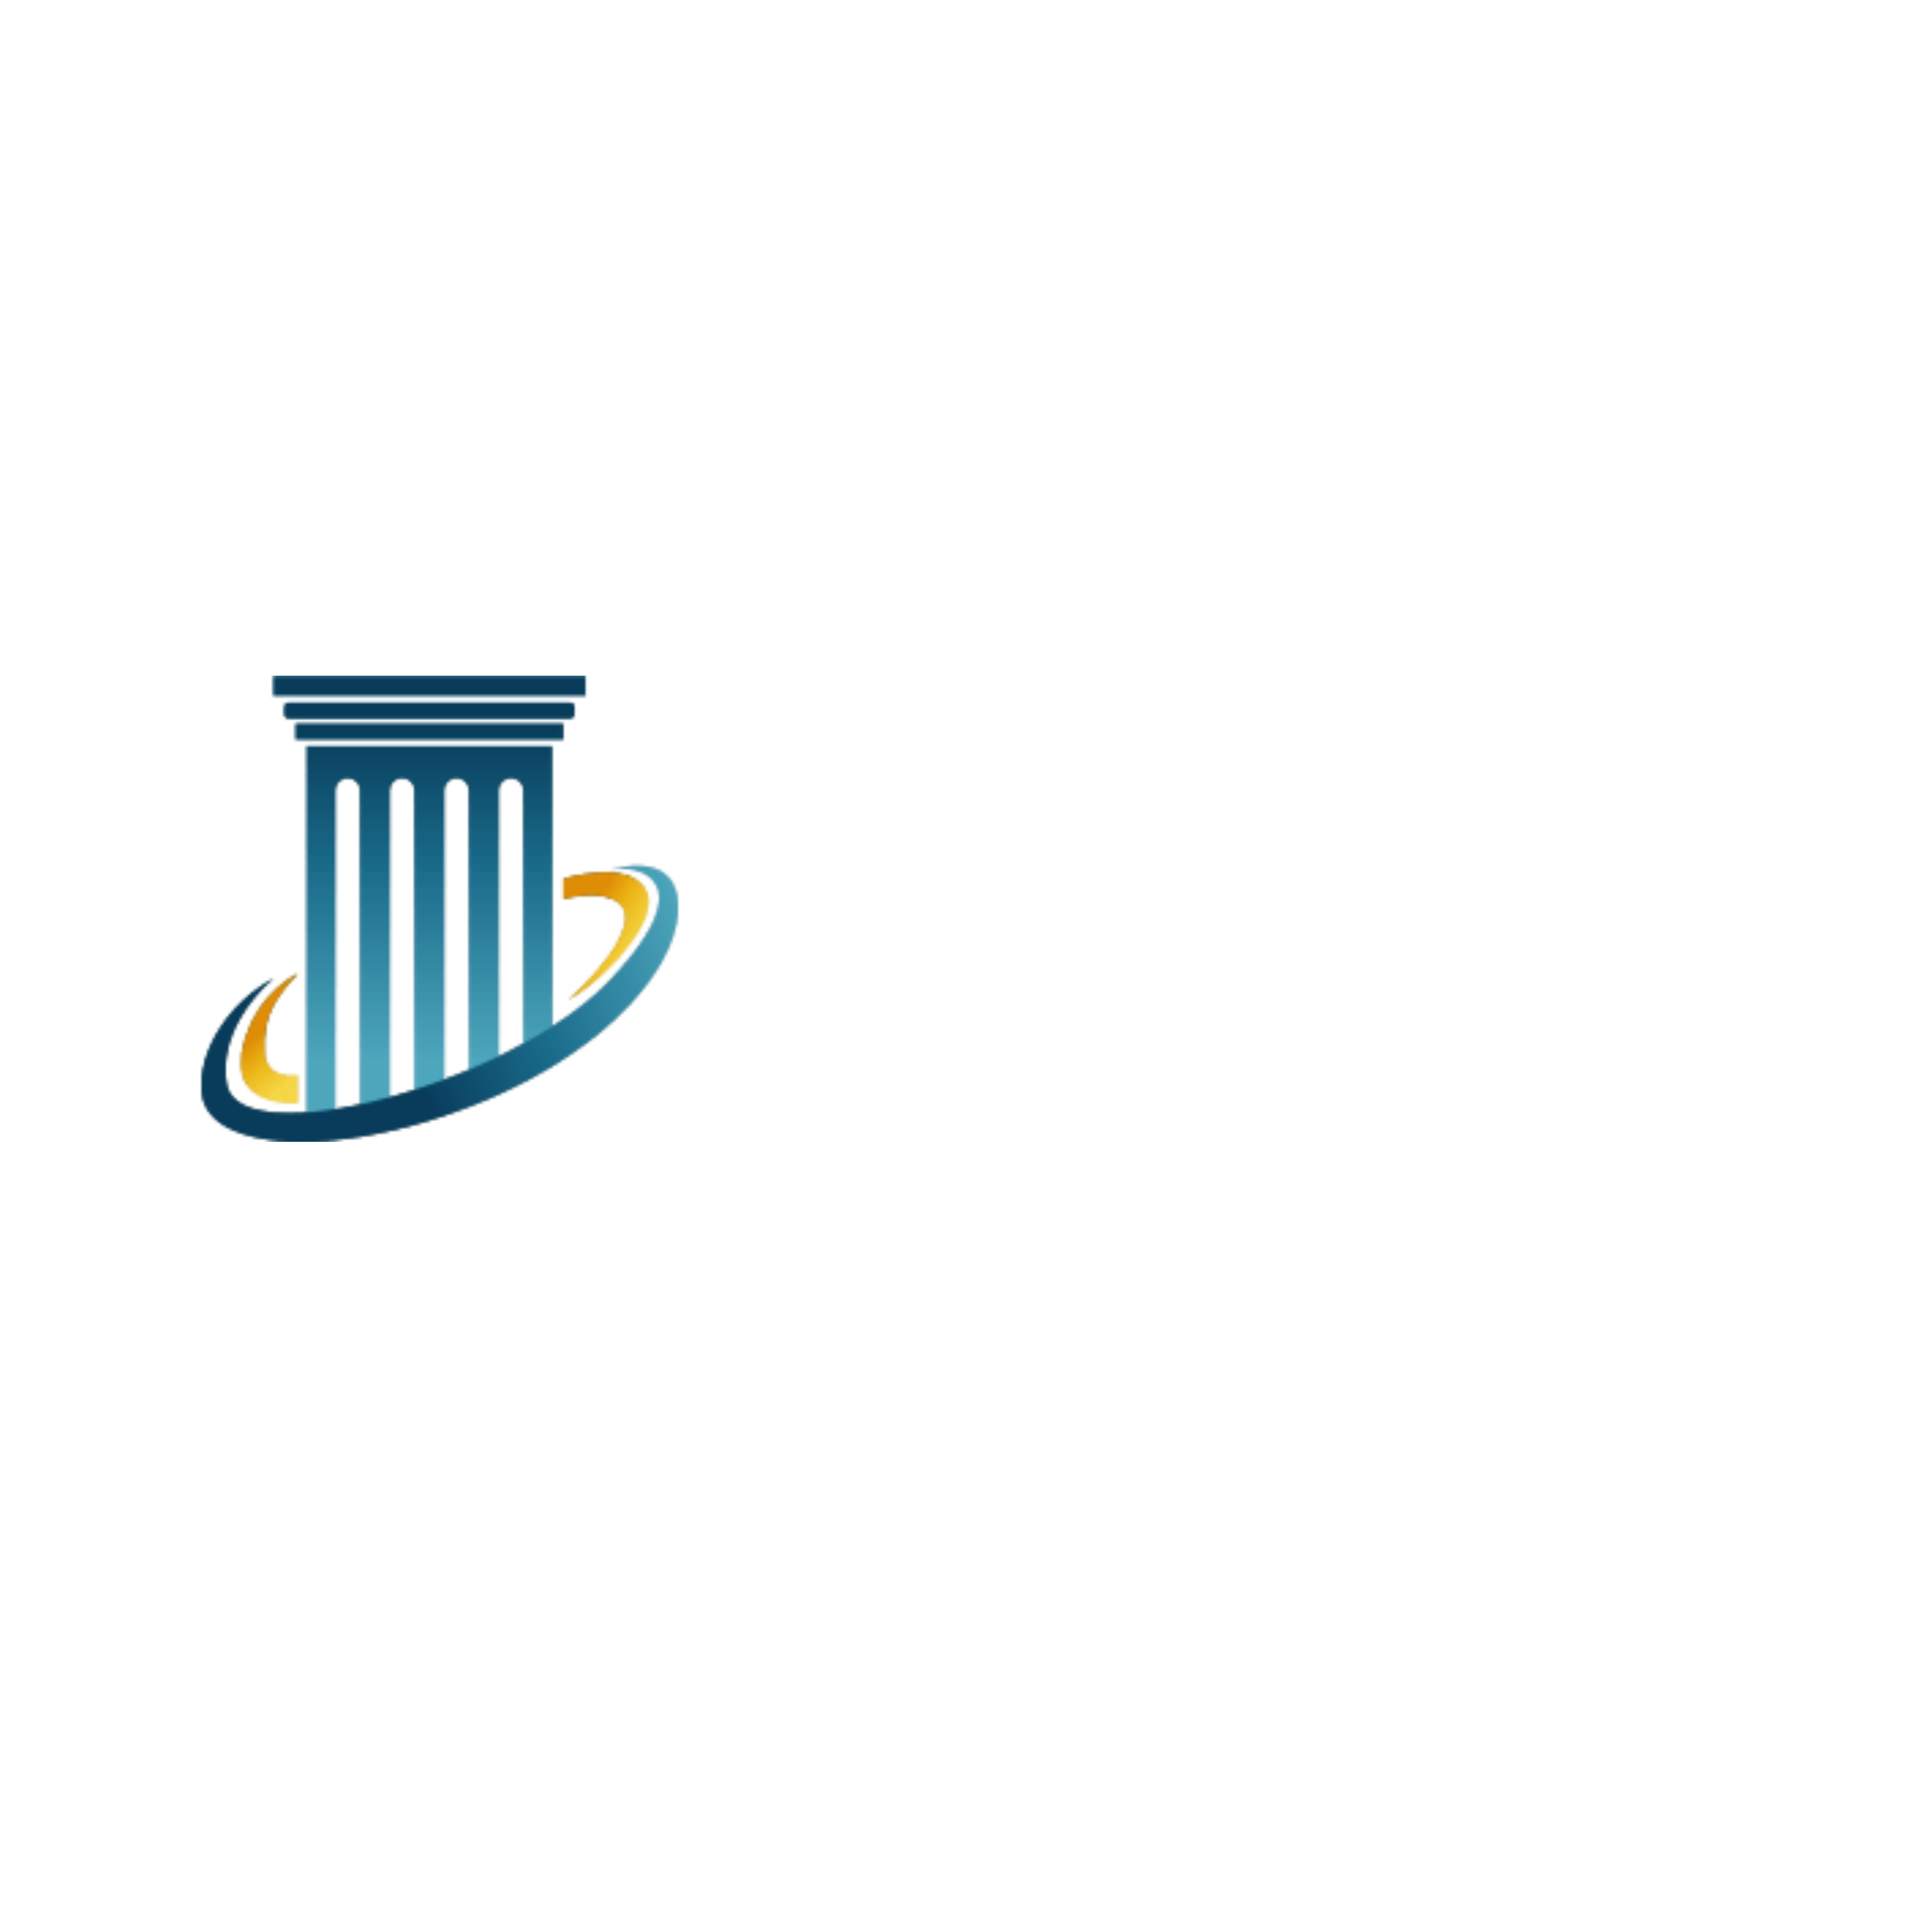 Property lawyer